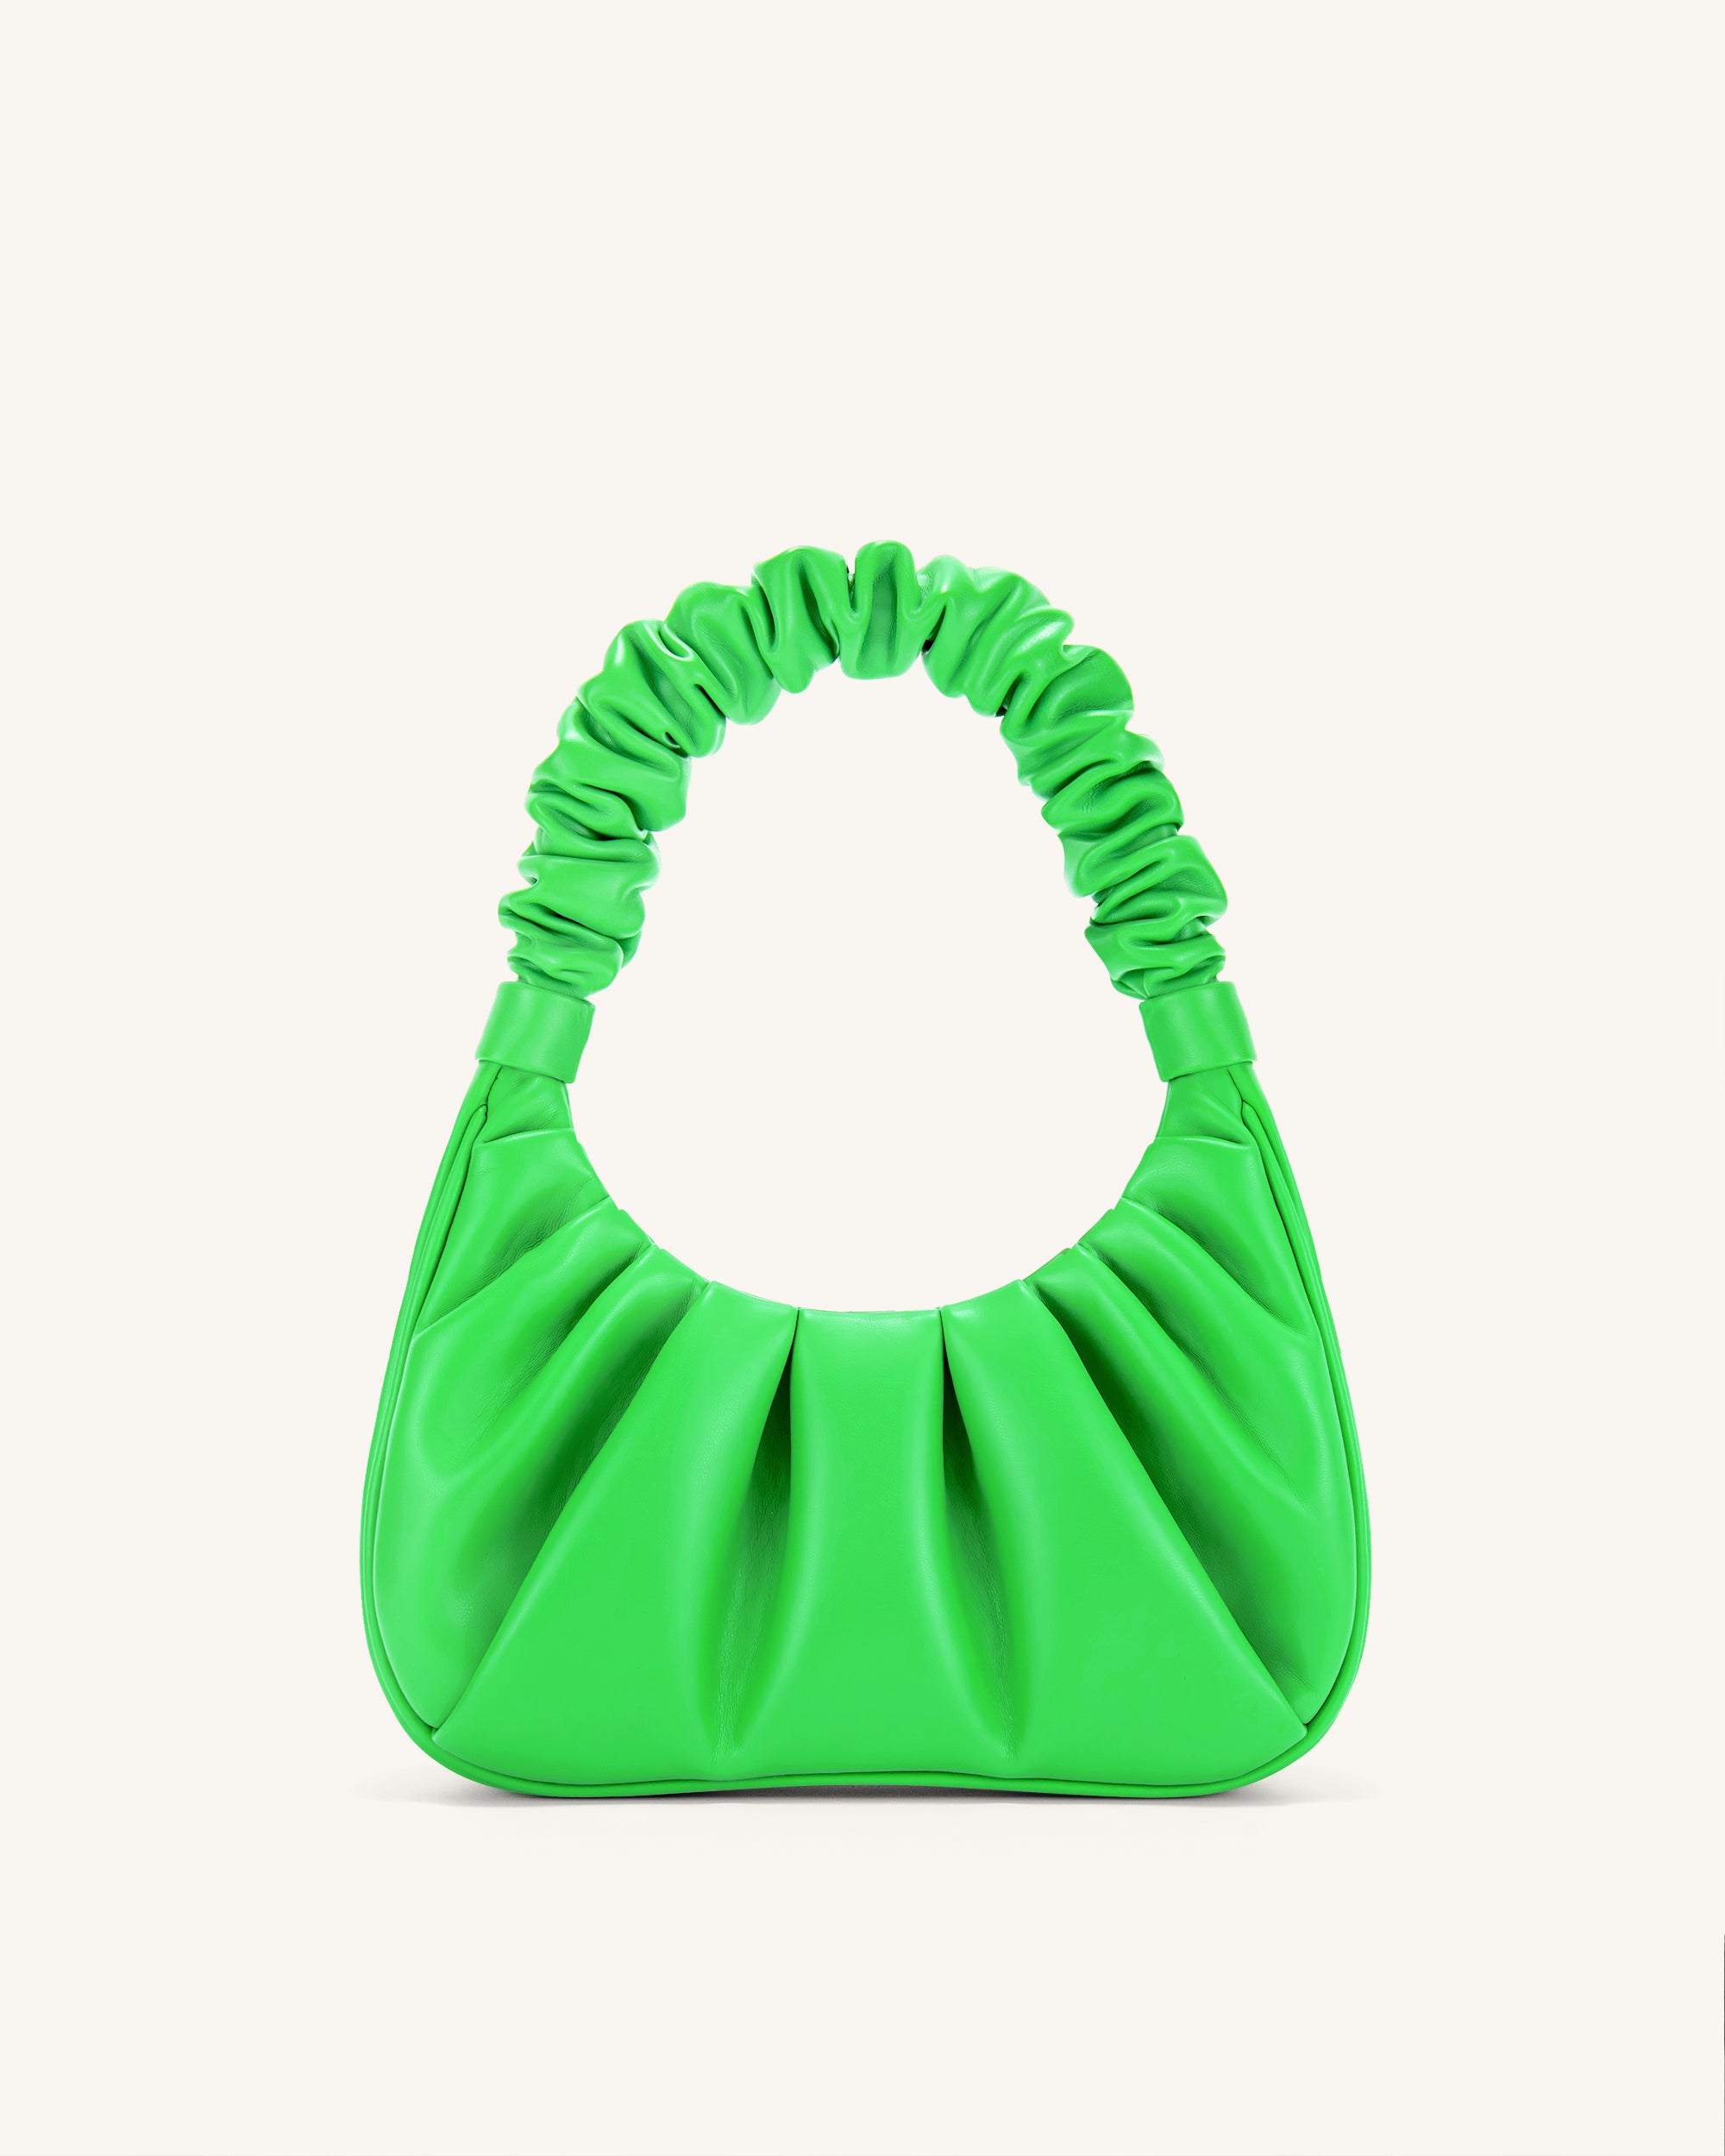 LAIBMFC Women's Ruched Hobo Handbag